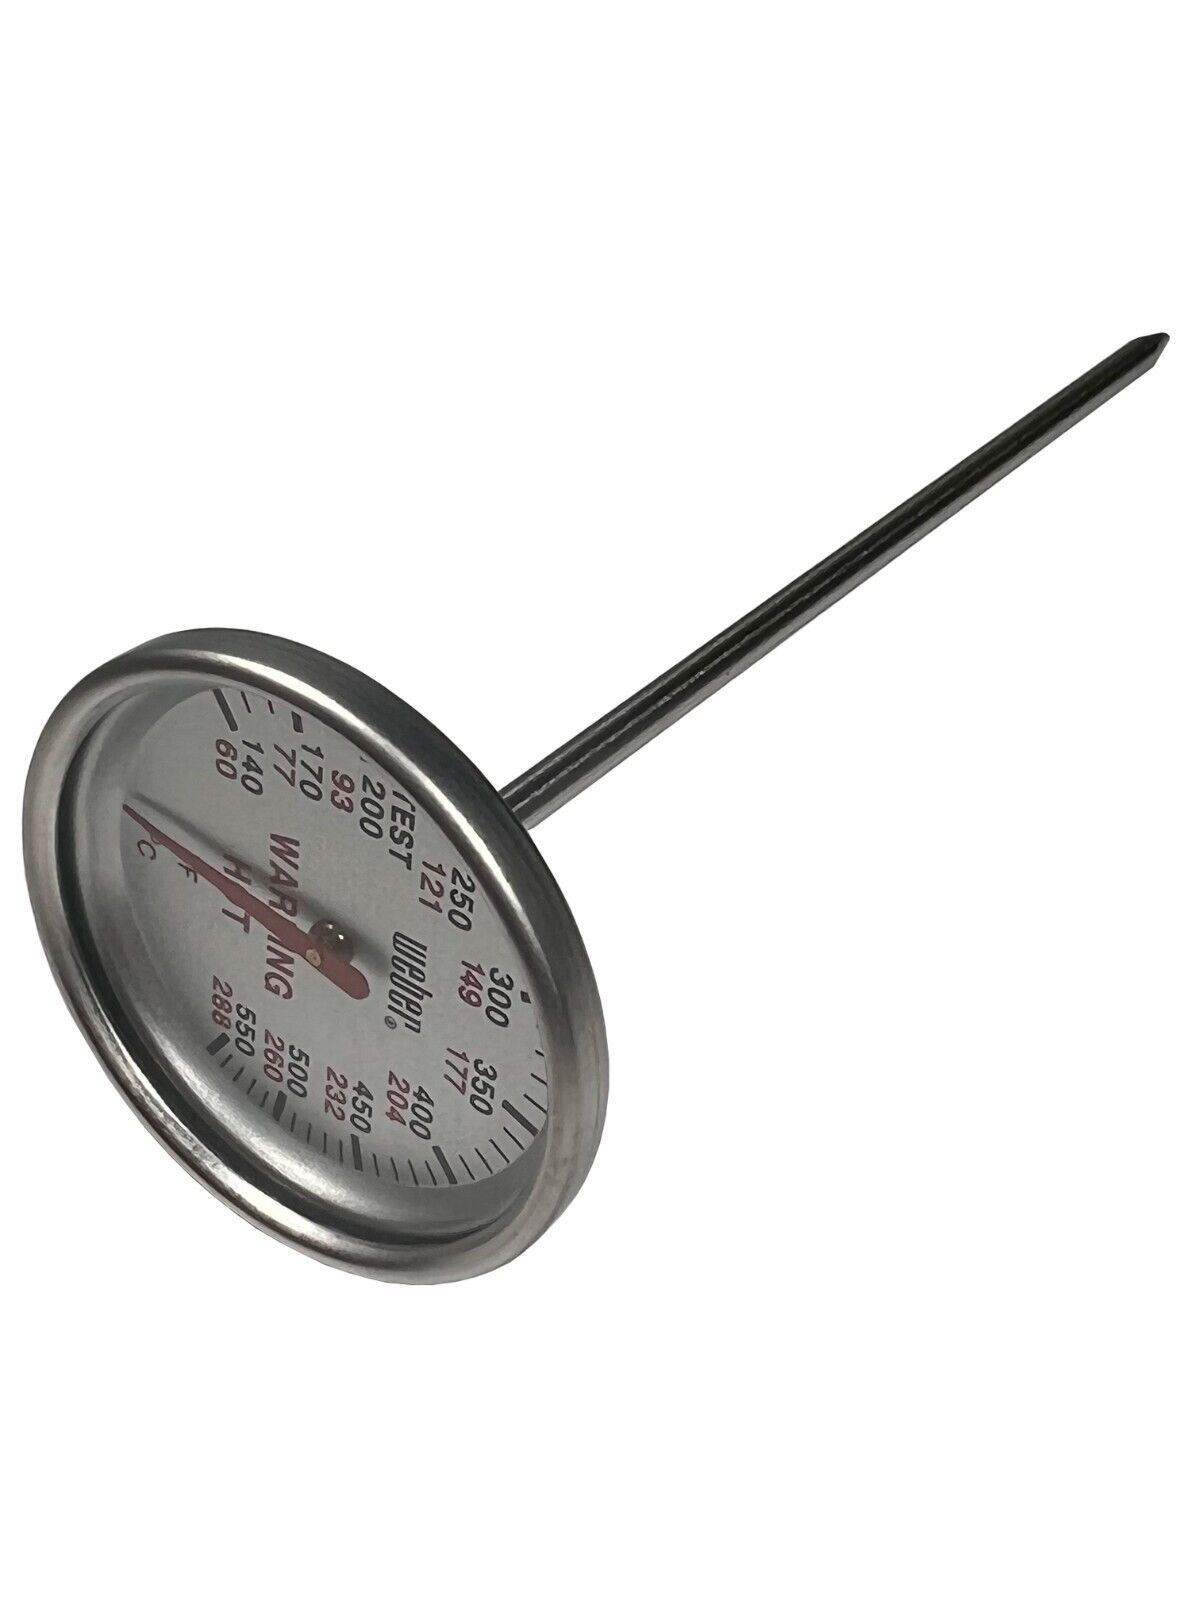 GENUINE WEBER Thermometer fits Spirit Genesis Platinum Series II Master Touch Al - $37.99